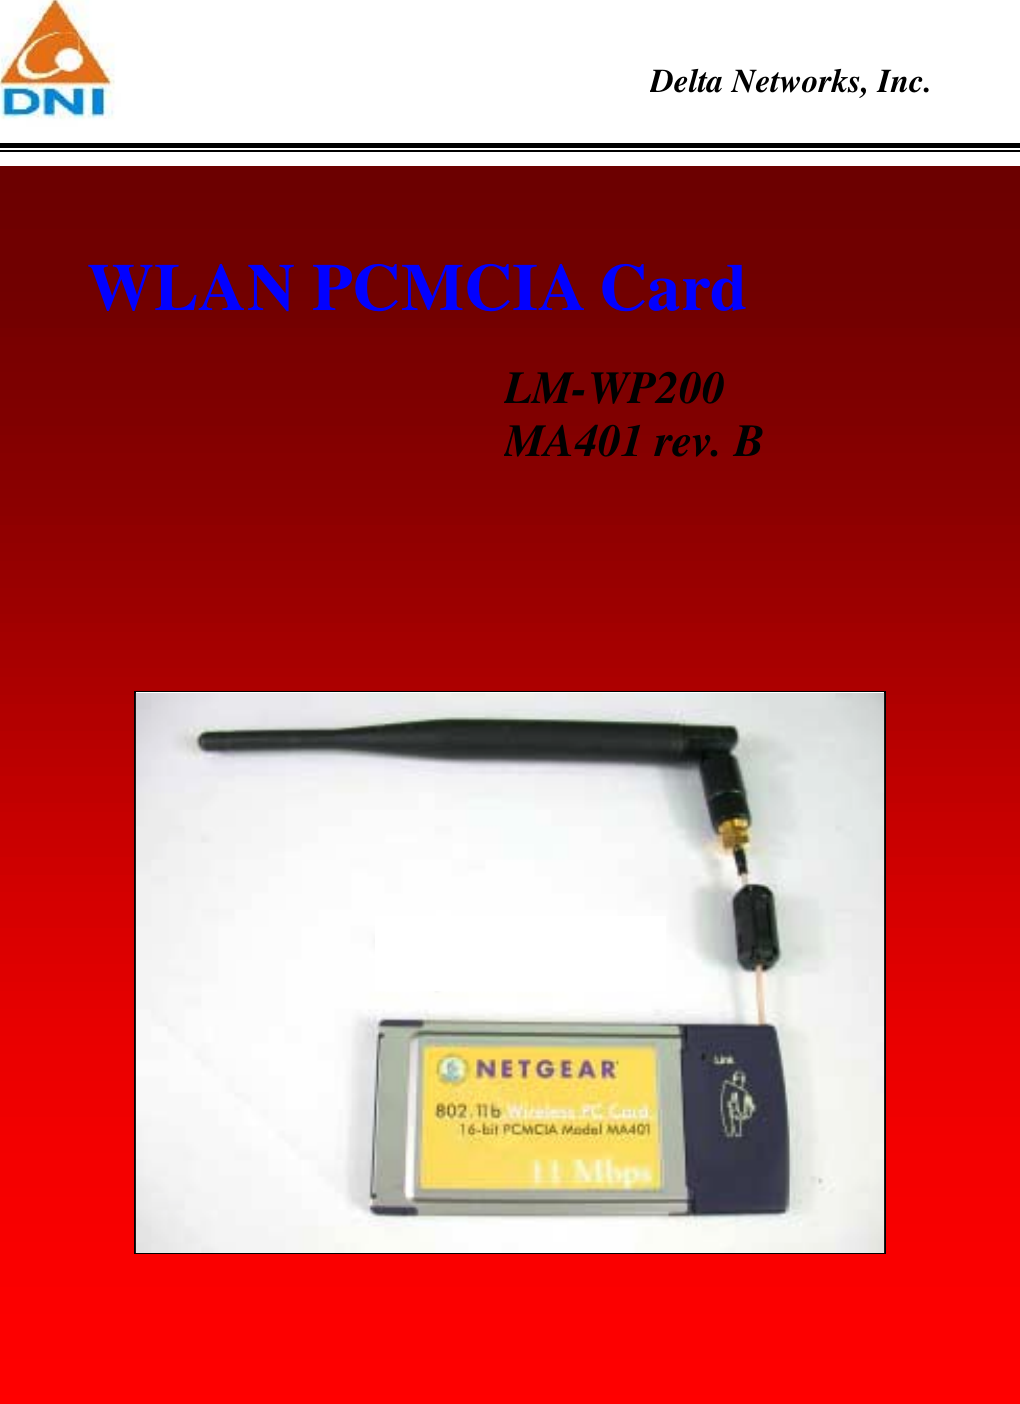    Delta Networks, Inc.            WLAN PCMCIA Card LM-WP200 MA401 rev. B  